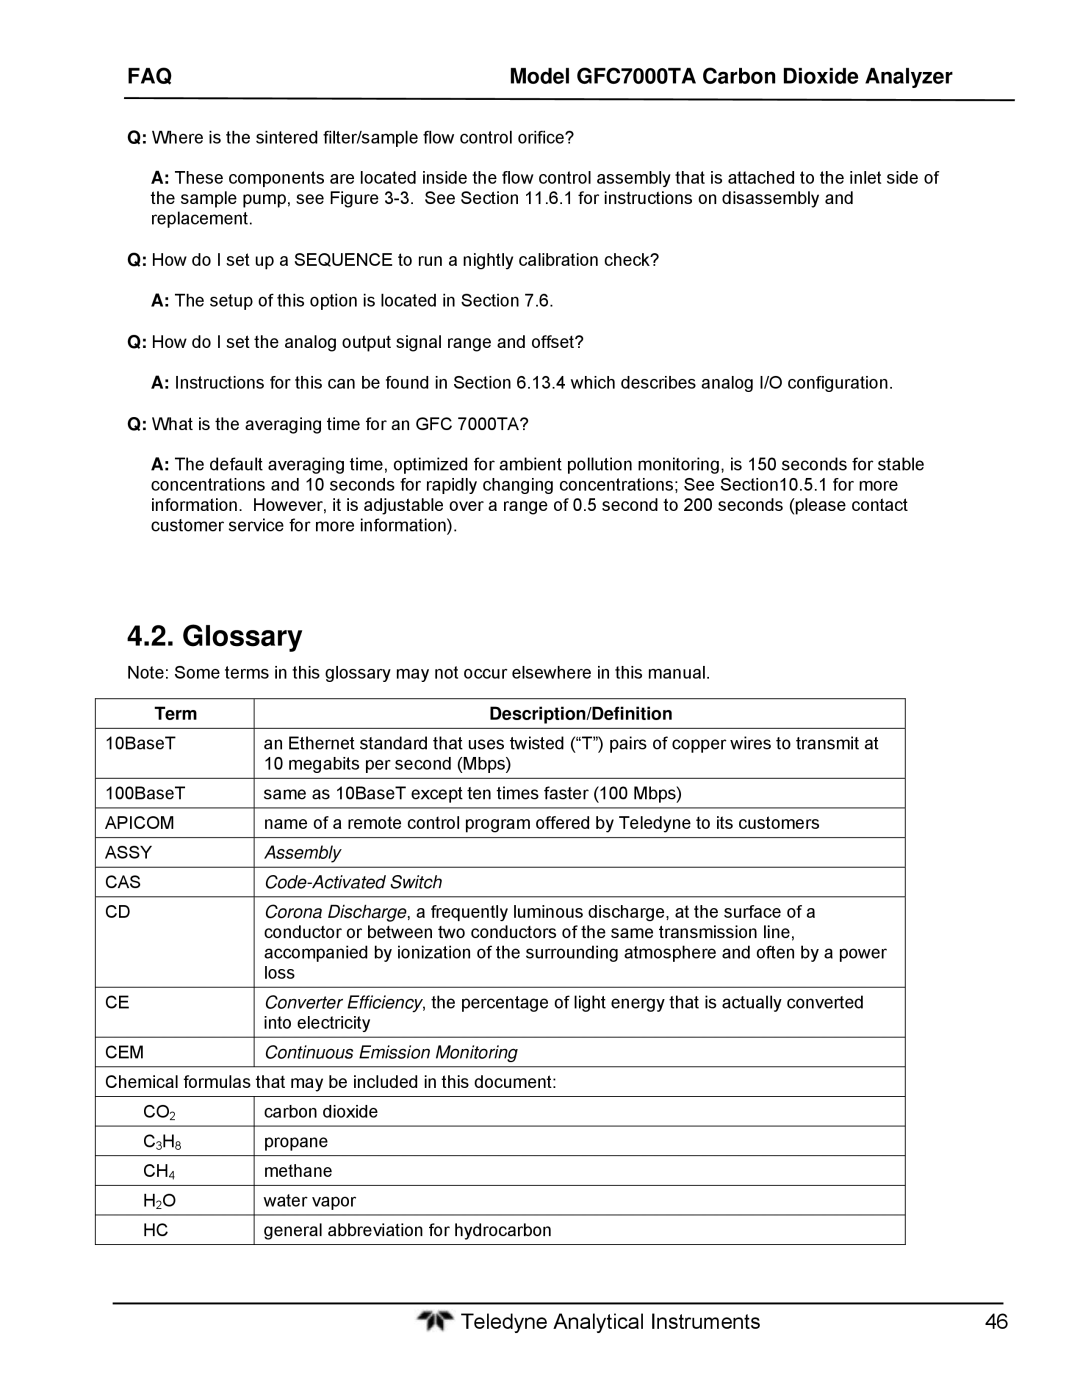 Teledyne gfc 7000ta operation manual Glossary, Term Description/Definition 